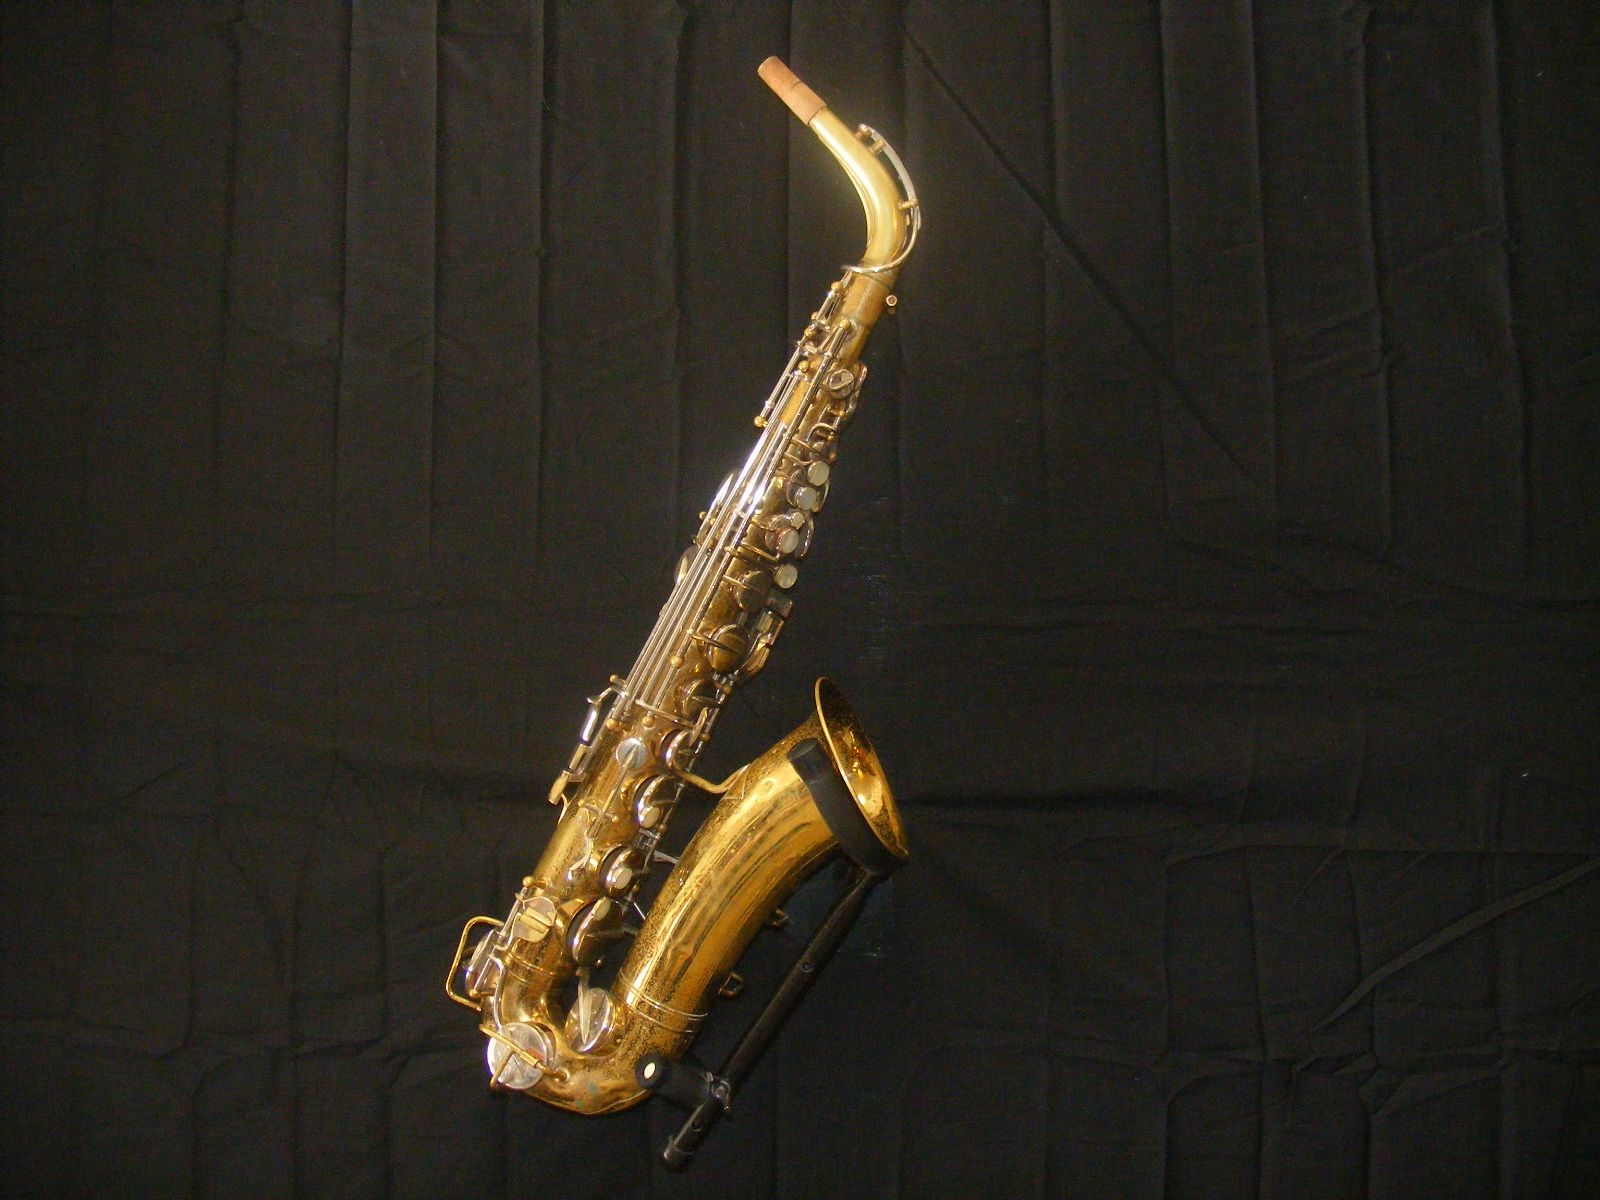 Alto Saxophone Wallpaper. Rialto Bridge